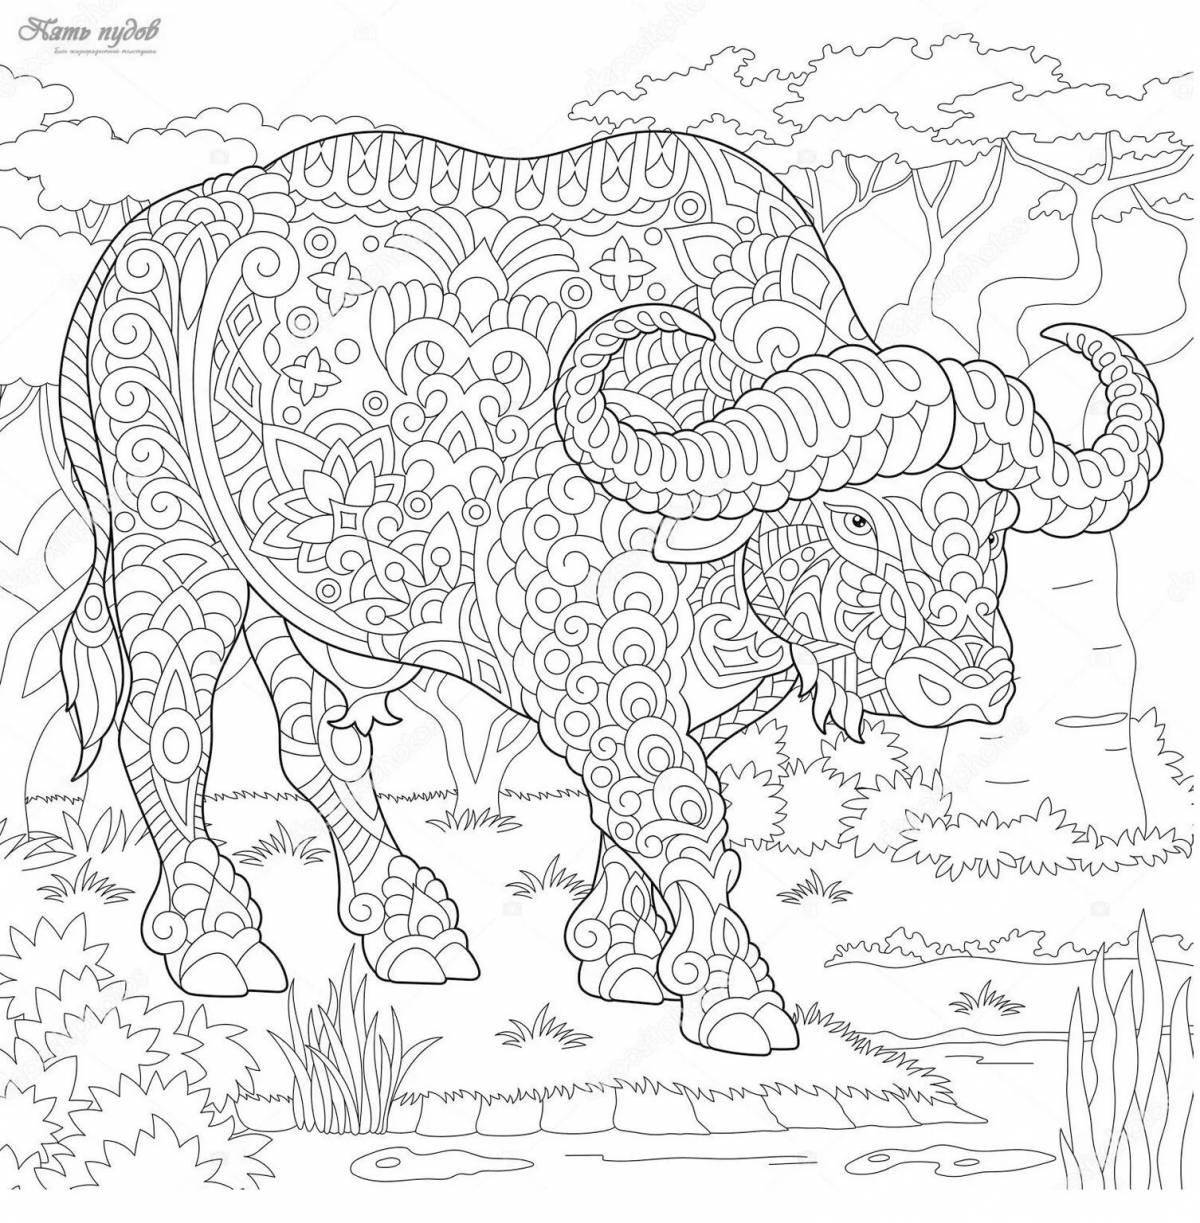 Mega animals generous coloring book